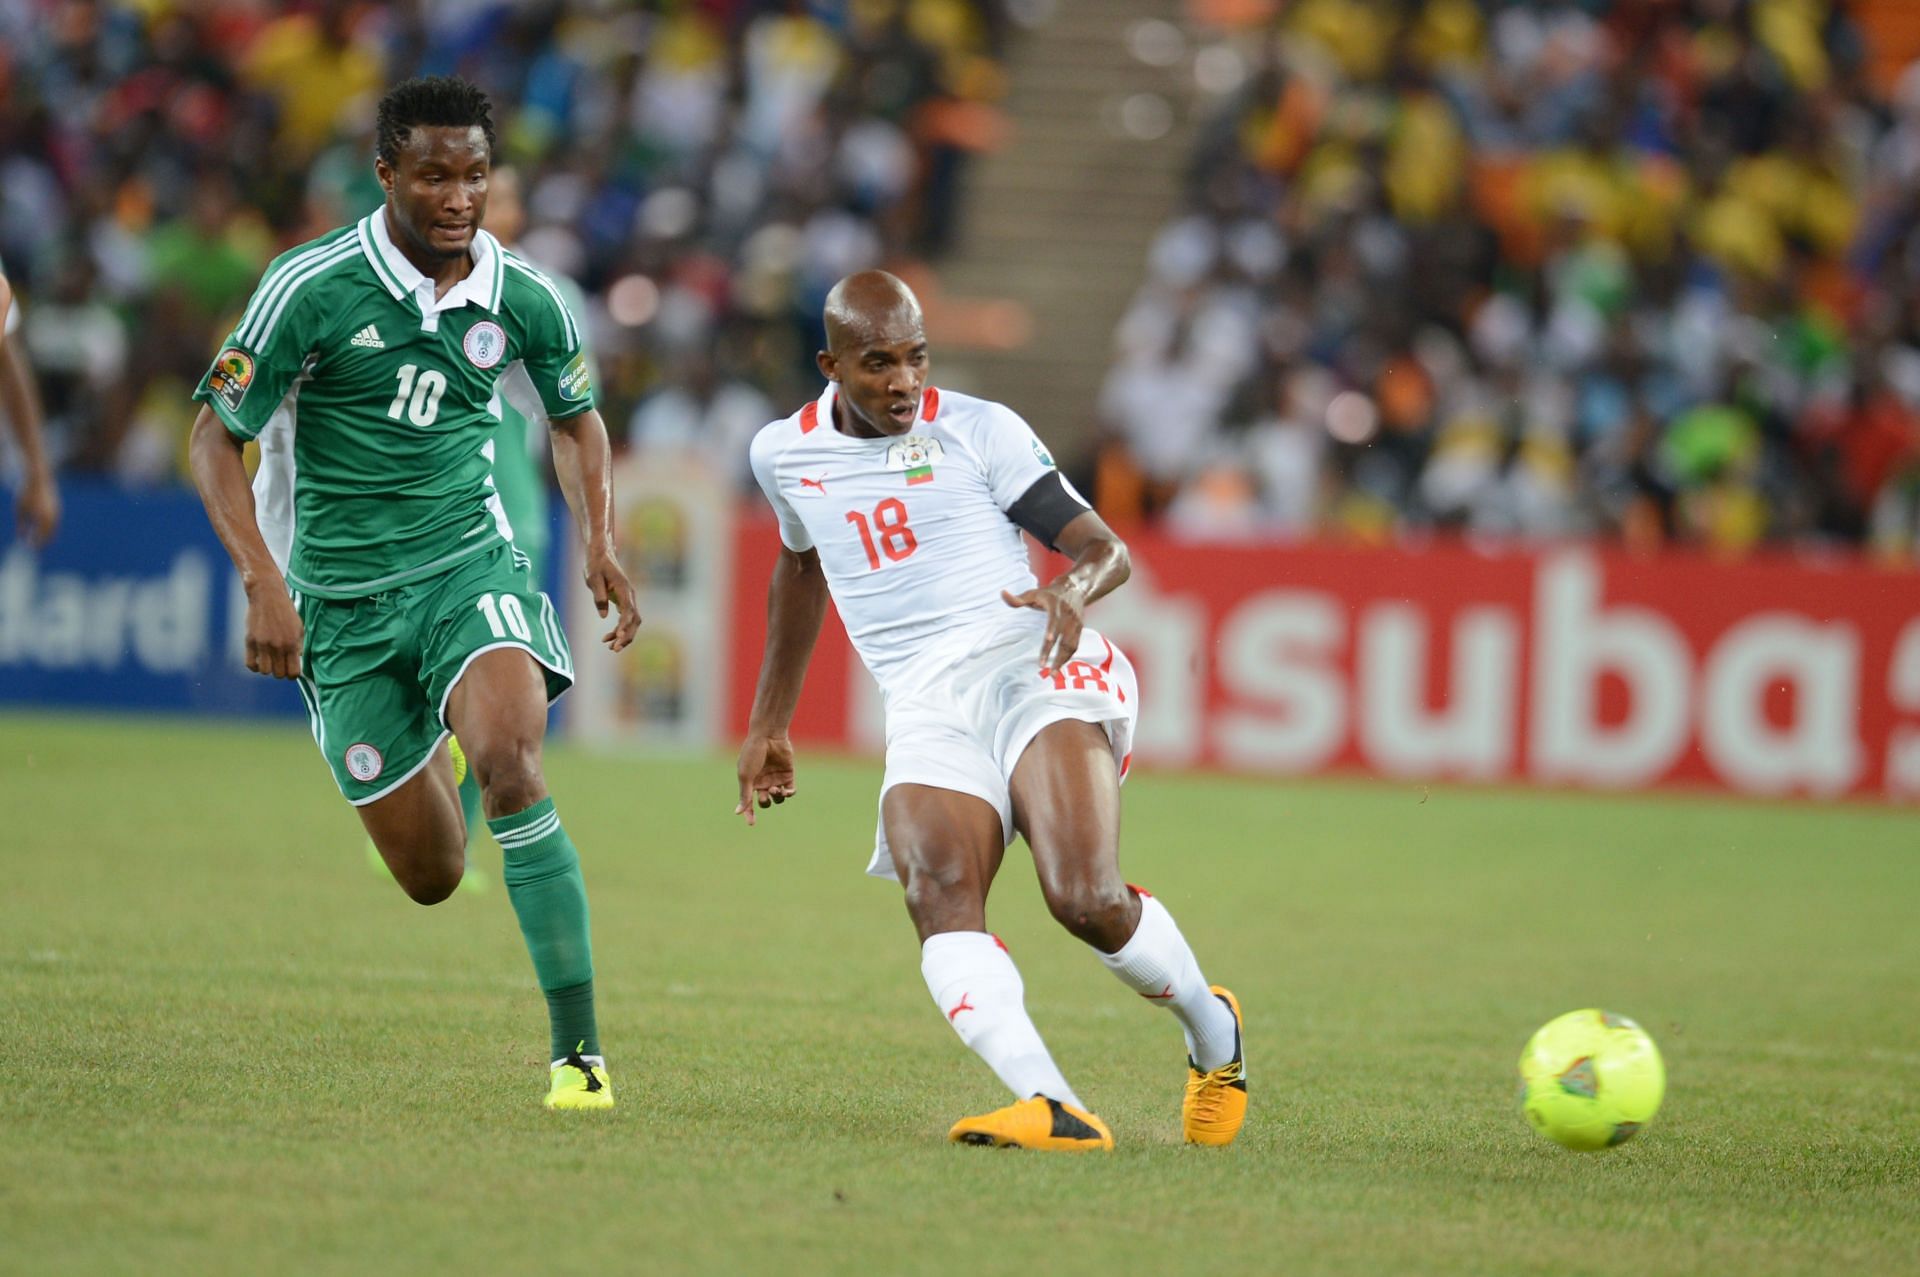 Burkina Faso have a 100% record against Eswatini